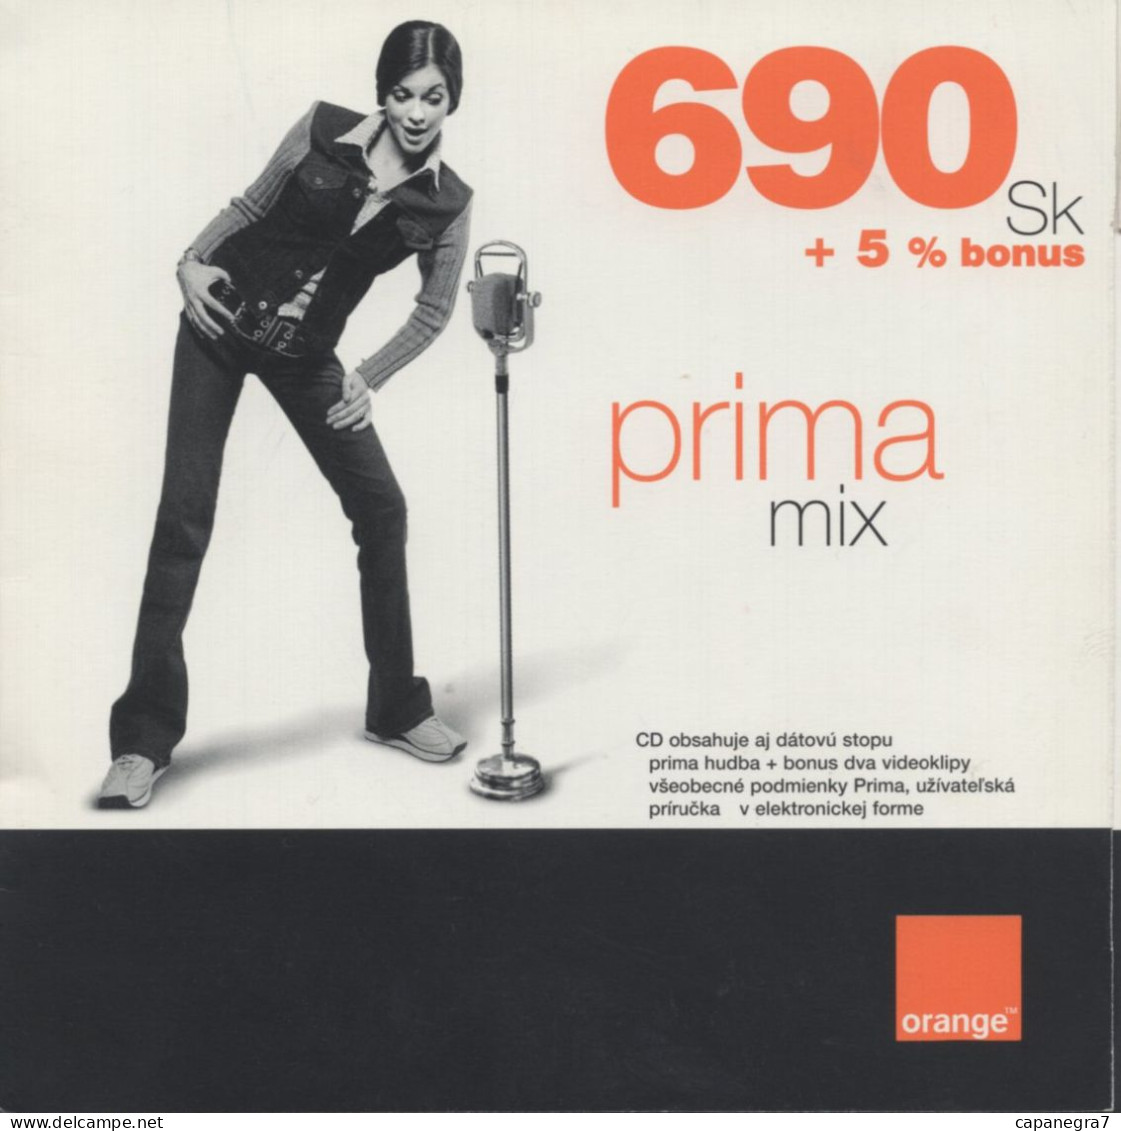 Prima Selection, Prima Mix 690 Sk, Polycarbonate Plastic CD, GSM Refill, Orange Slovakia, Validity 30.06.2004, Slovakia - Slovacchia